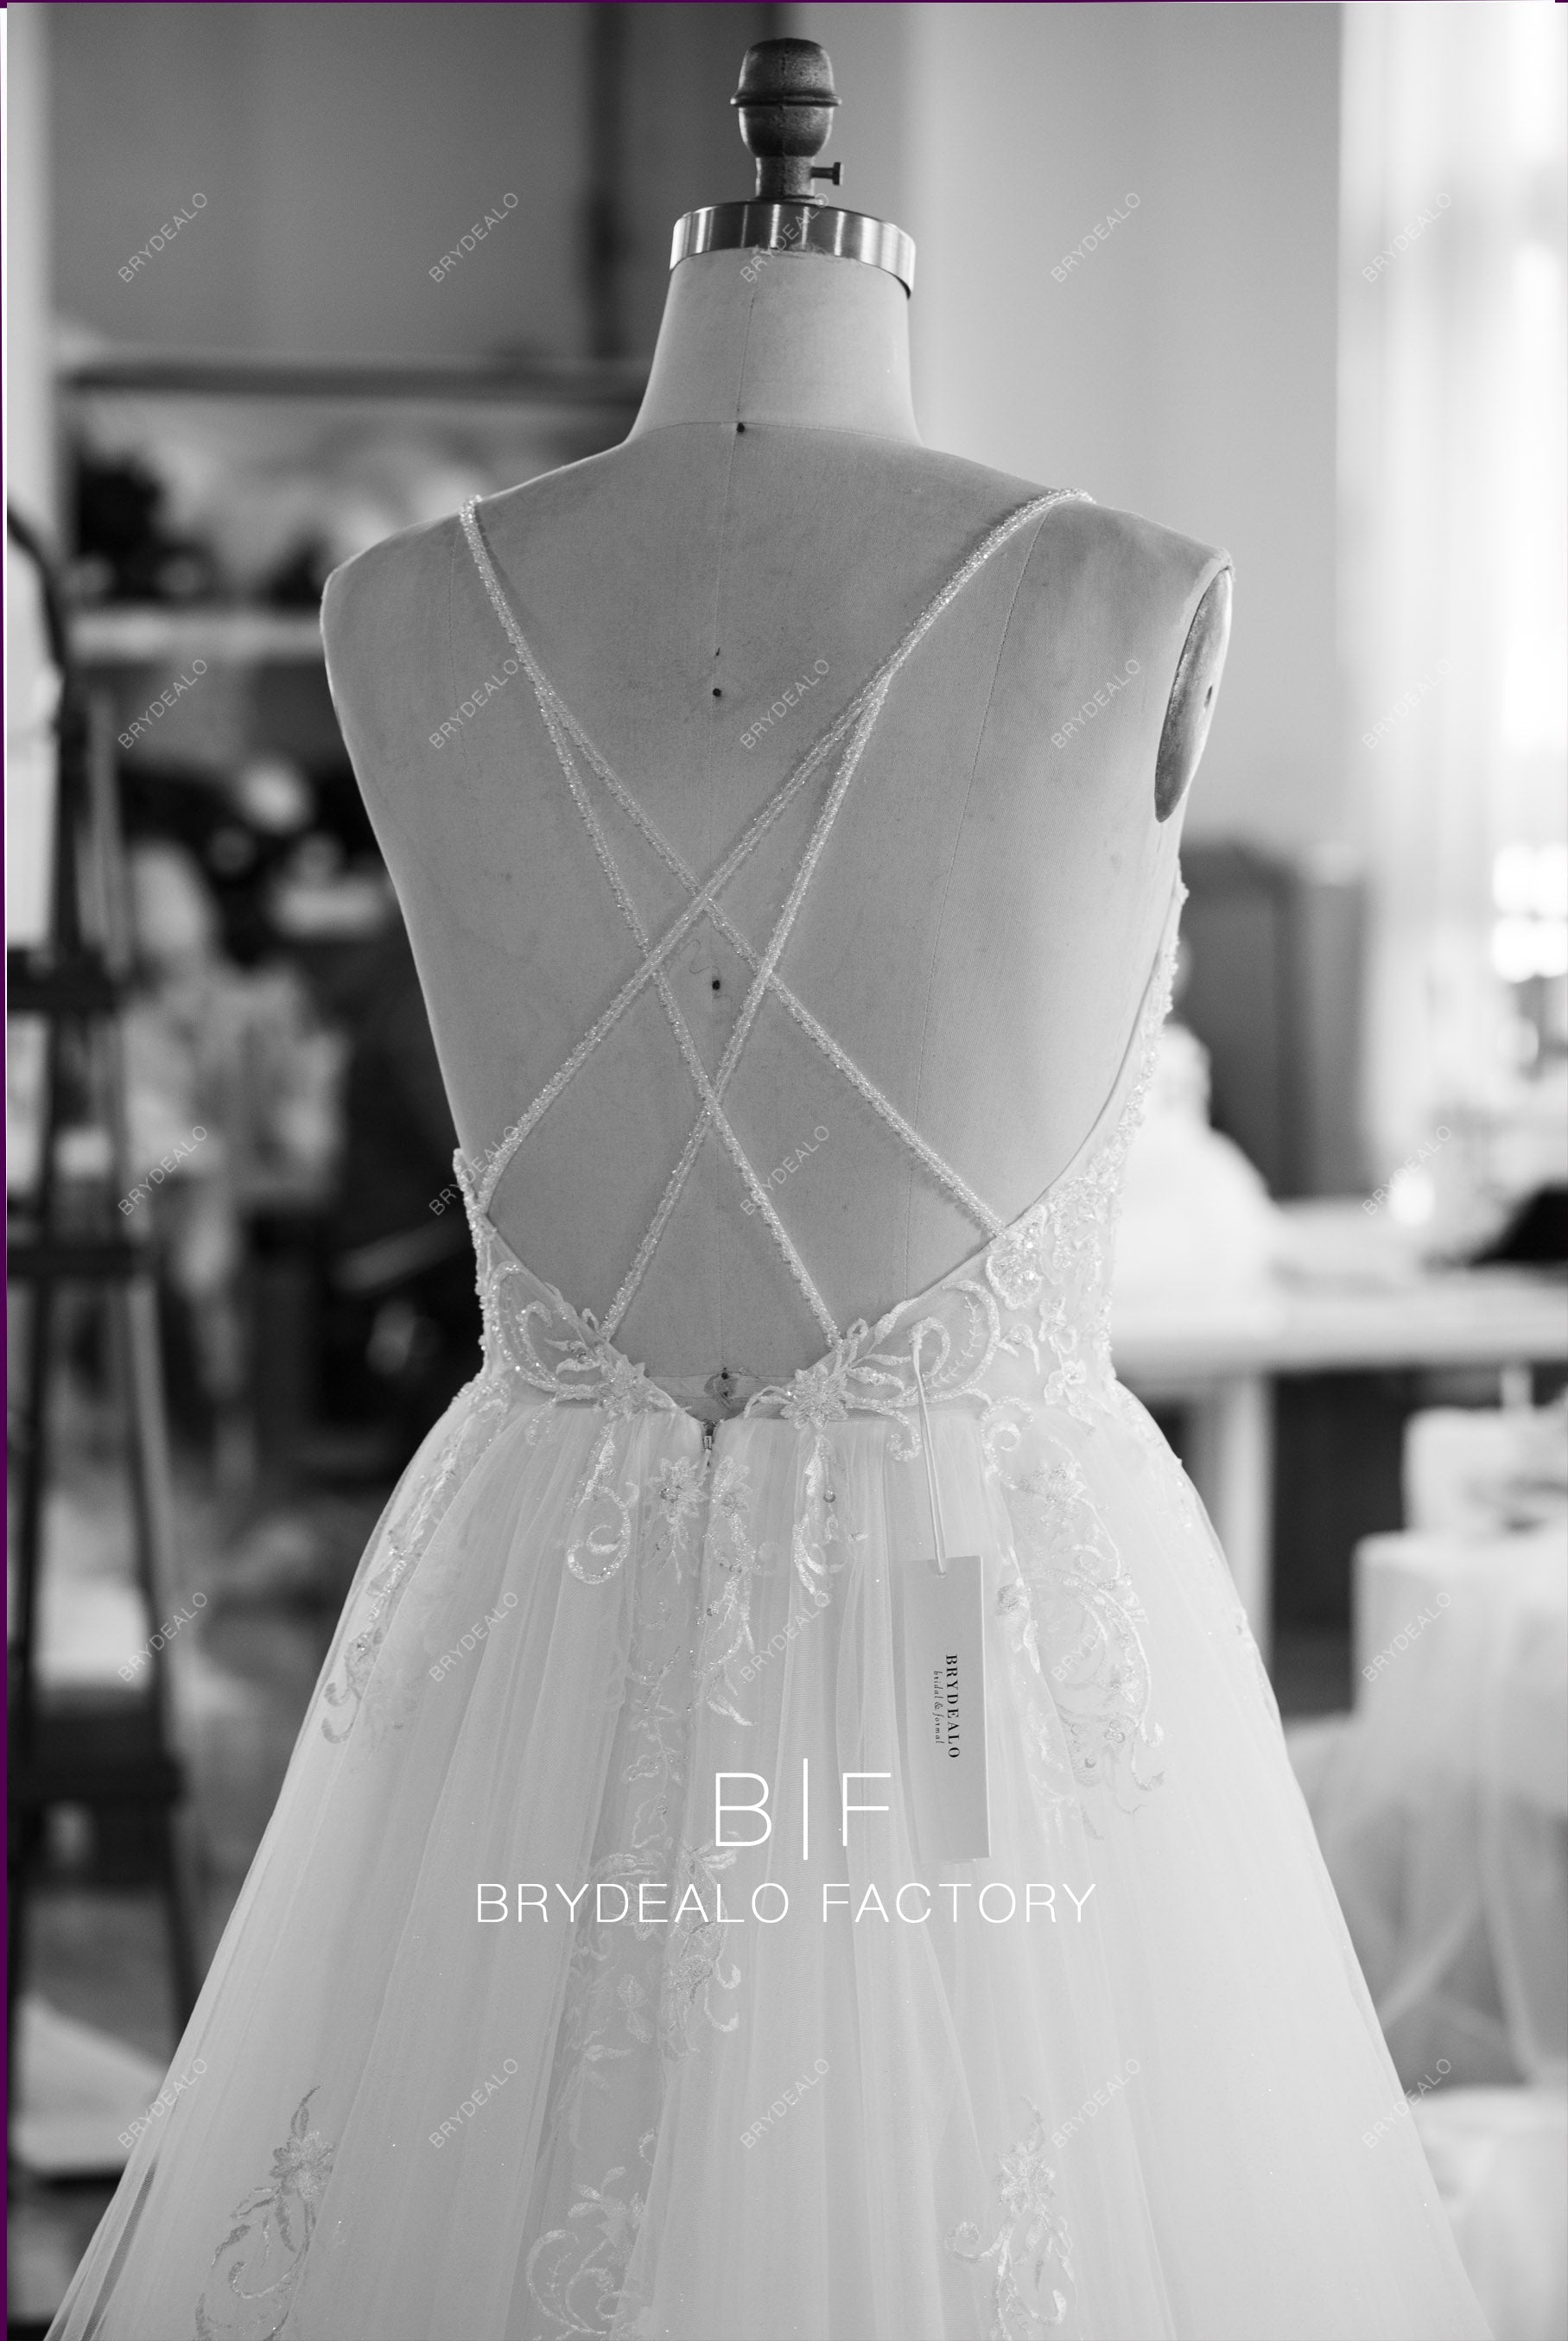 designer criss-cross back lace wedding dress